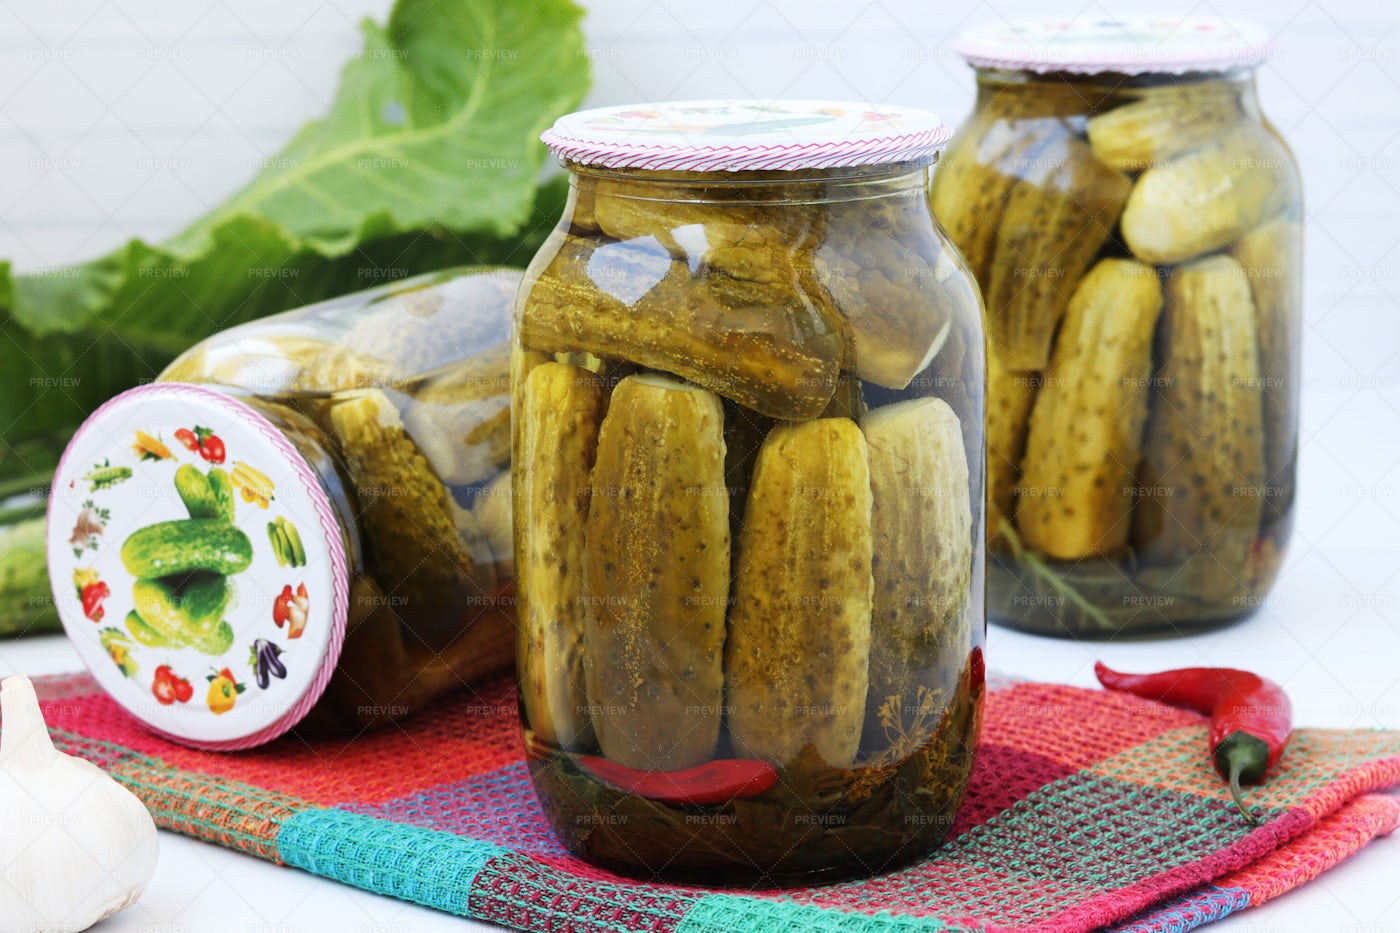 Three Jars Of Pickles: Stock Photos